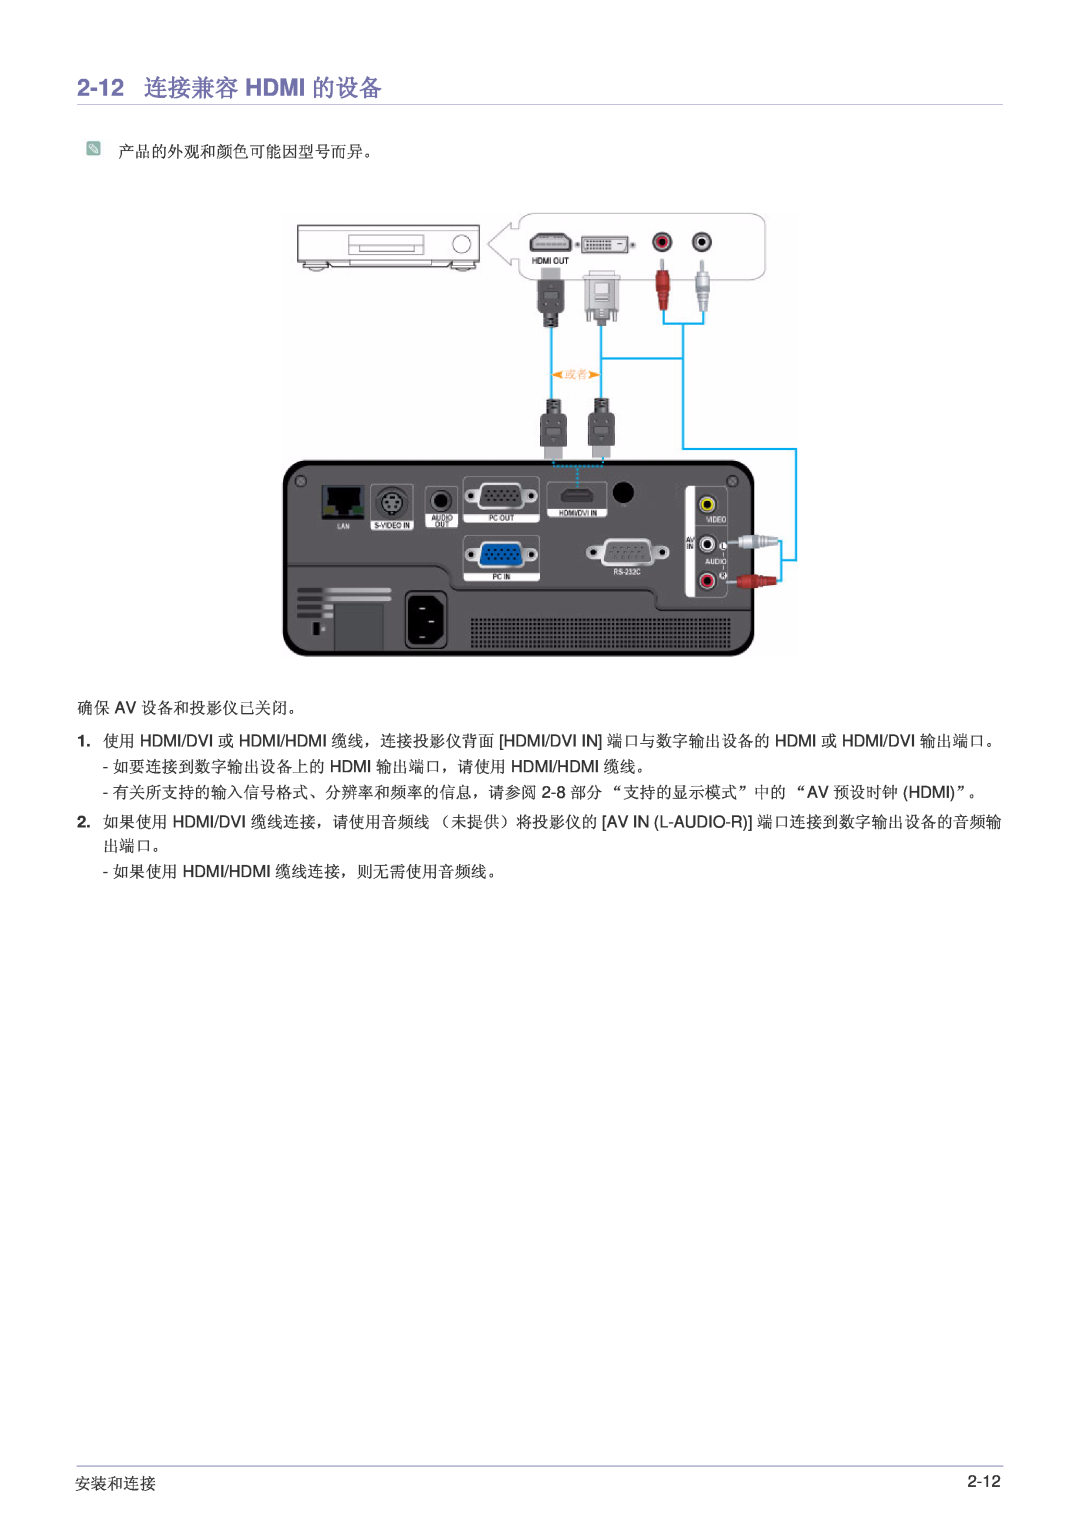 Samsung SP1055XWX/EN 2-12 连接兼容 HDMI 的设备, 产品的外观和颜色可能因型号而异。 确保 Av 设备和投影仪已关闭。, 如要连接到数字输出设备上的 Hdmi 输出端口，请使用 Hdmi/Hdmi 缆线。 